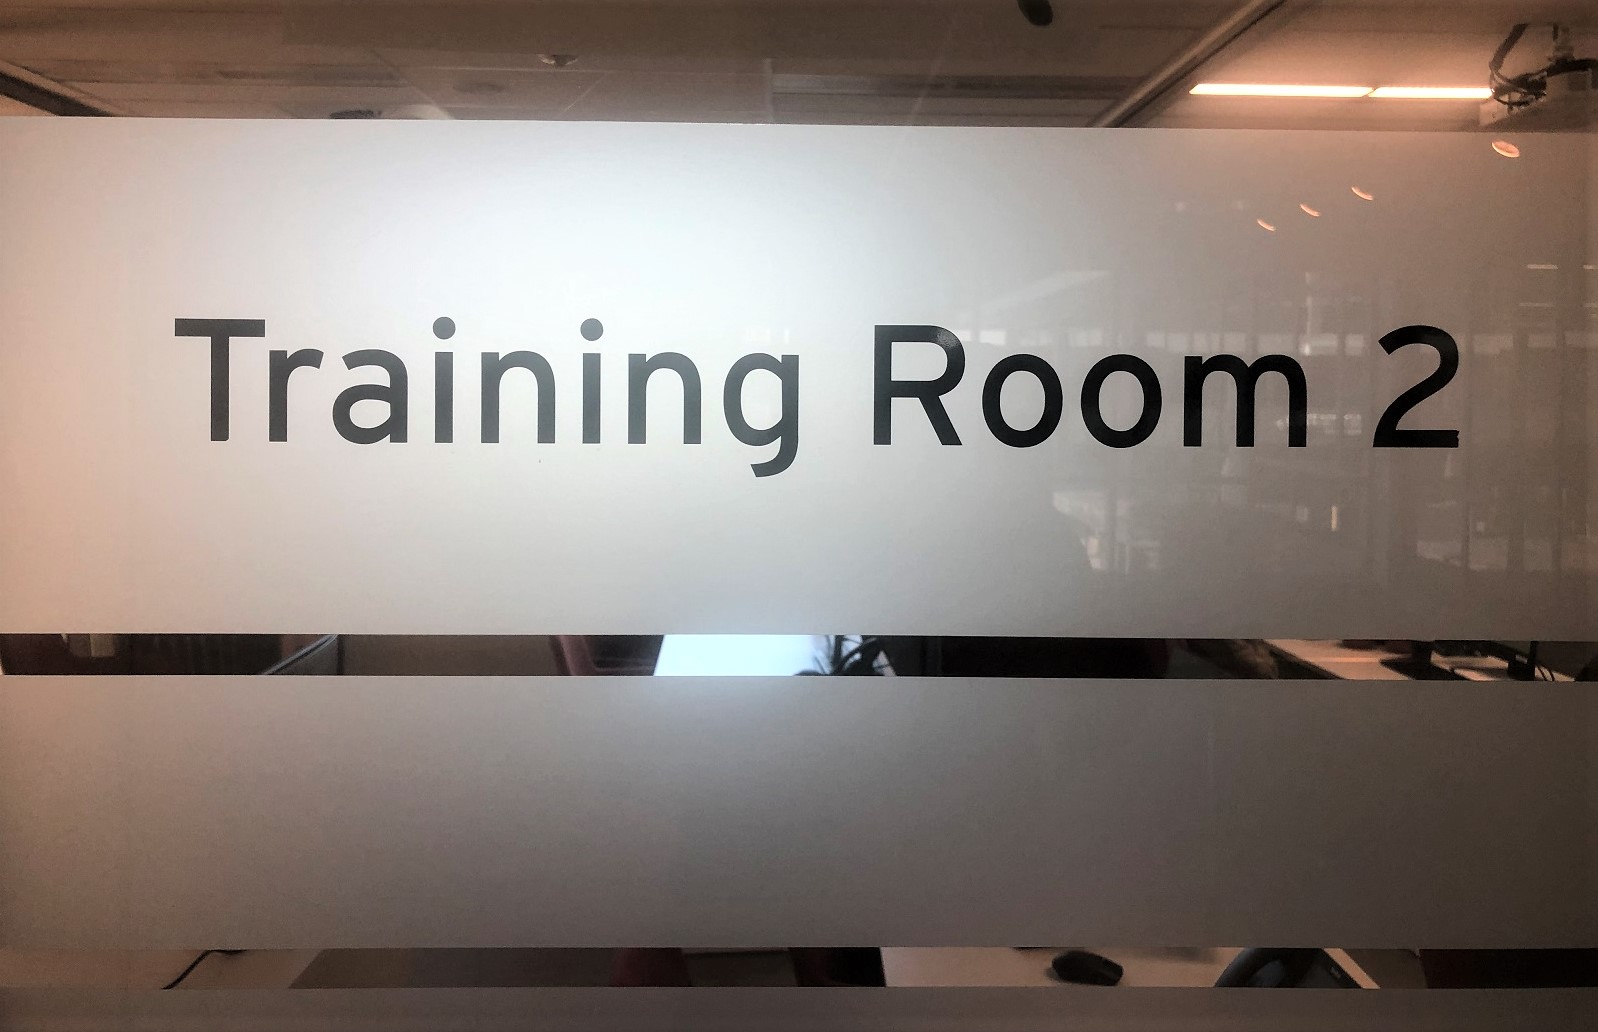 Training Room Office & Desktop Signage NSW